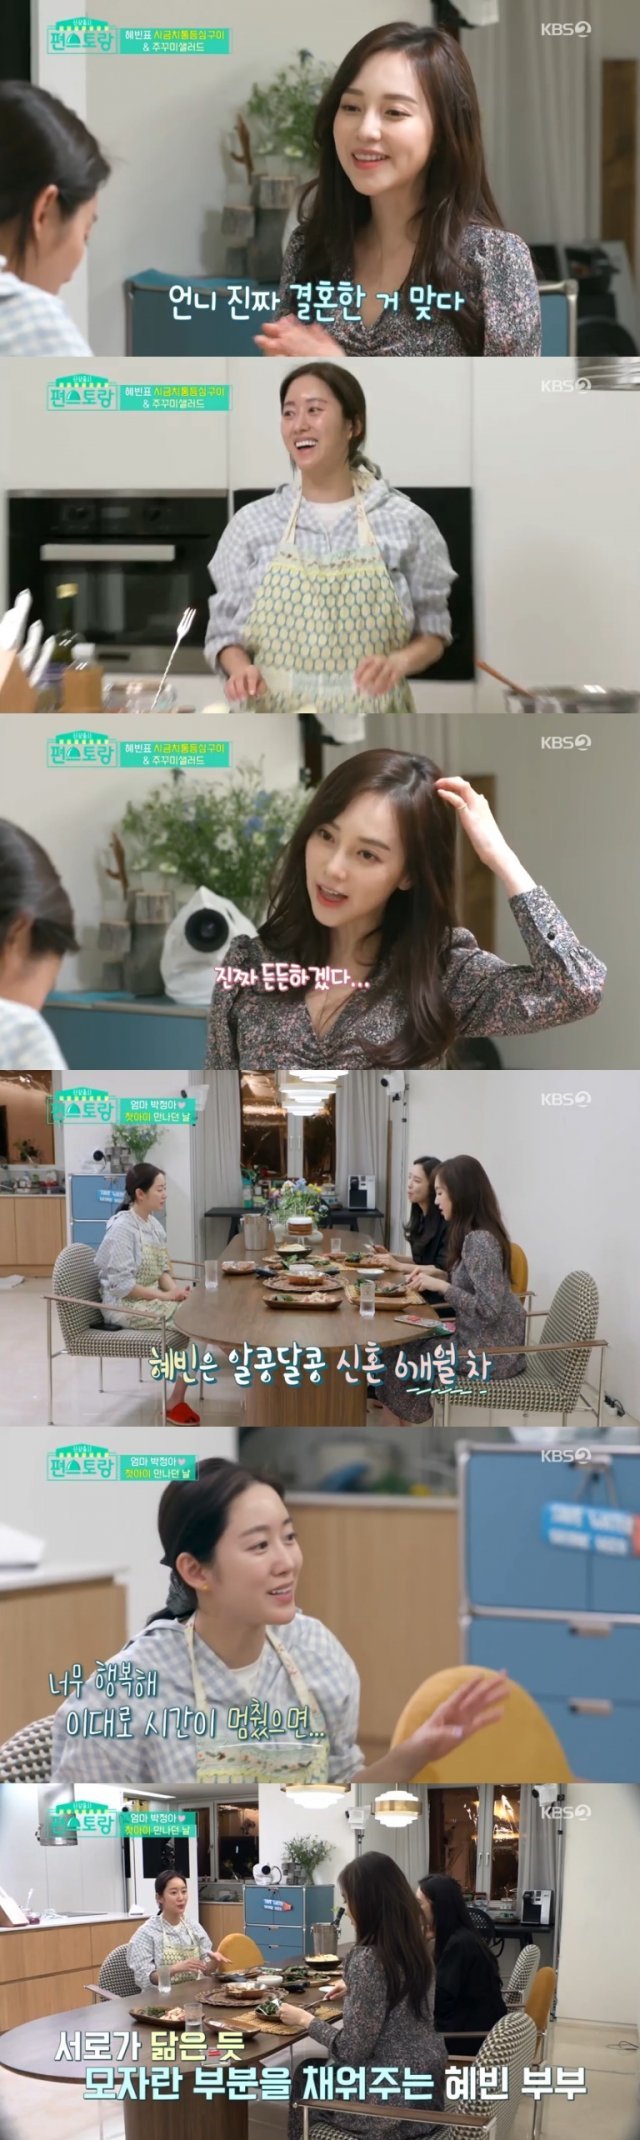 KBS 2TV ‘편스토랑’ 캡처